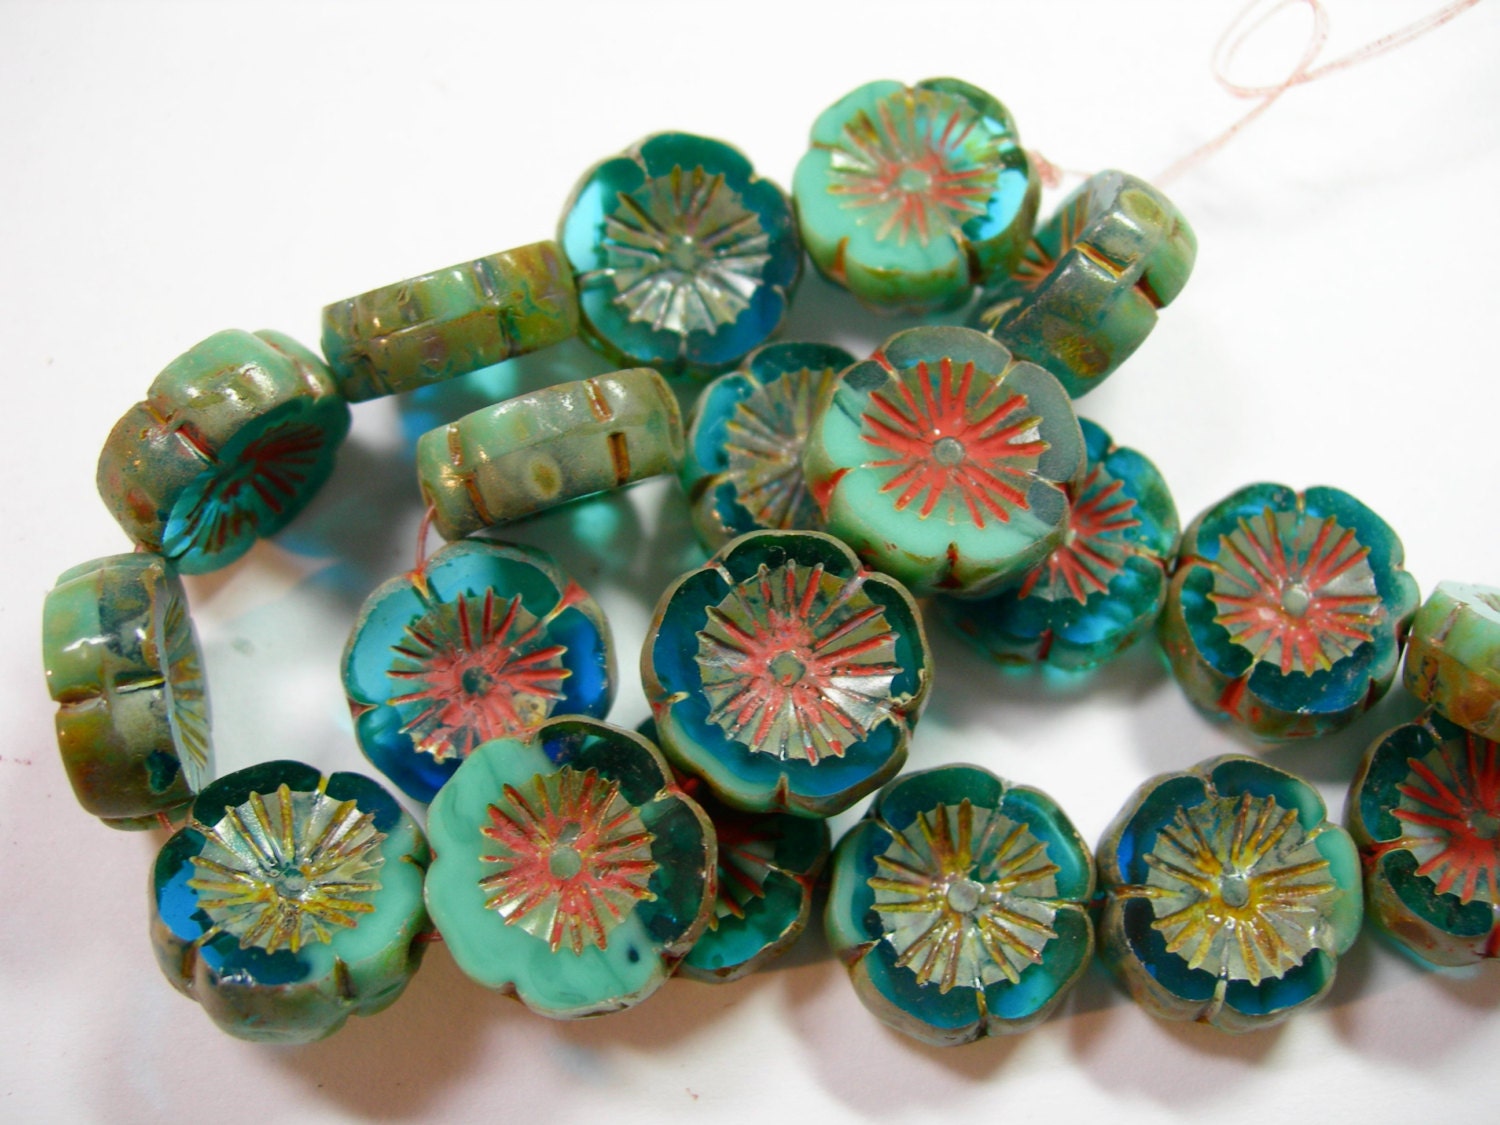 14mm Tea Green Turquoise Flower Bead, Picasso Czech Glass Beads 8